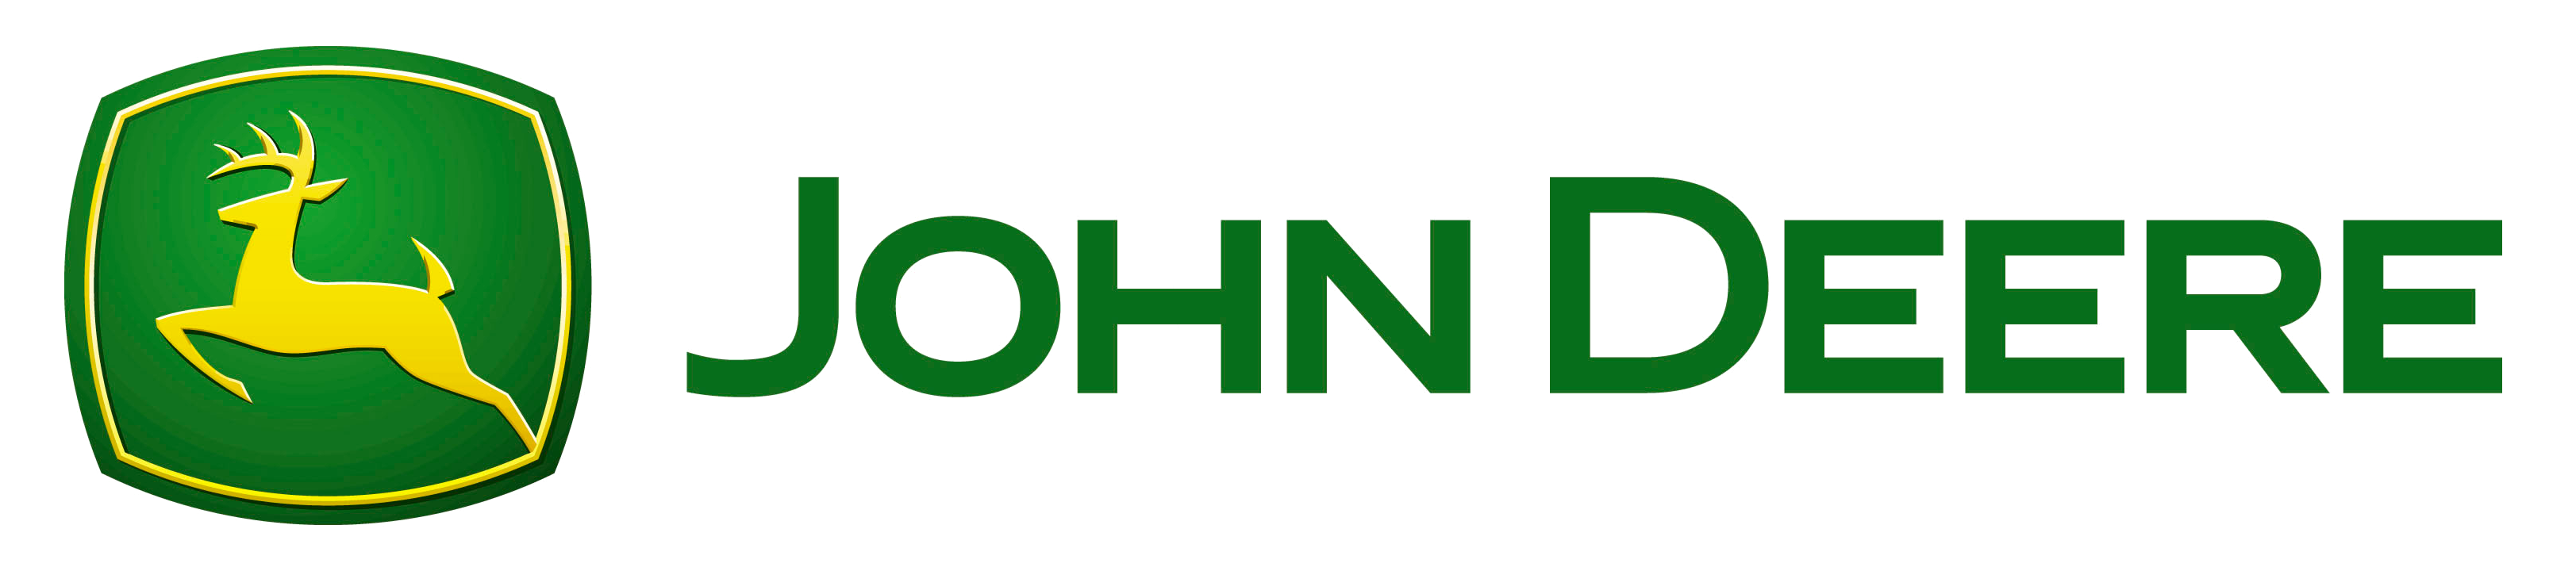 Download John Deere Logo PNG Image for Free